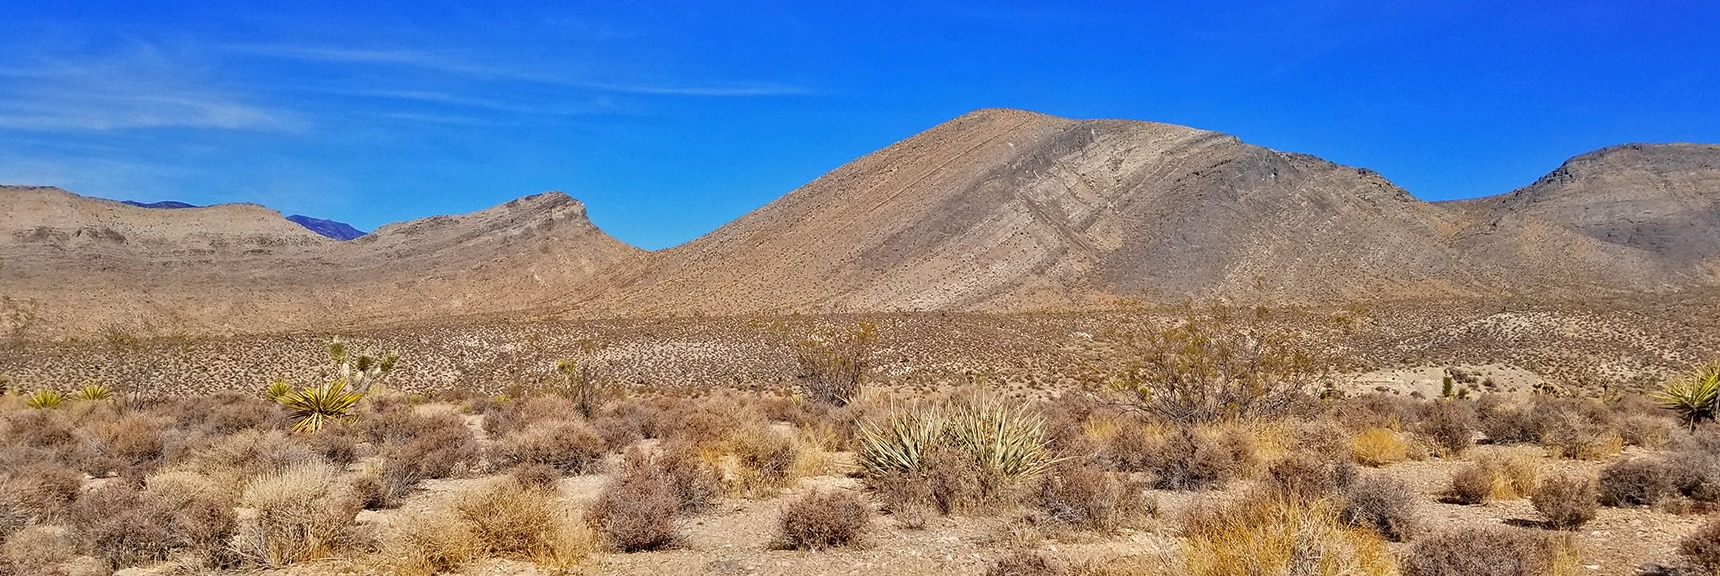 Upper Fossil Ridge and Potential Pass from Gass Peak Road Near Trailhead | Gass Peak Road Circuit | Desert National Wildlife Refuge | Nevada